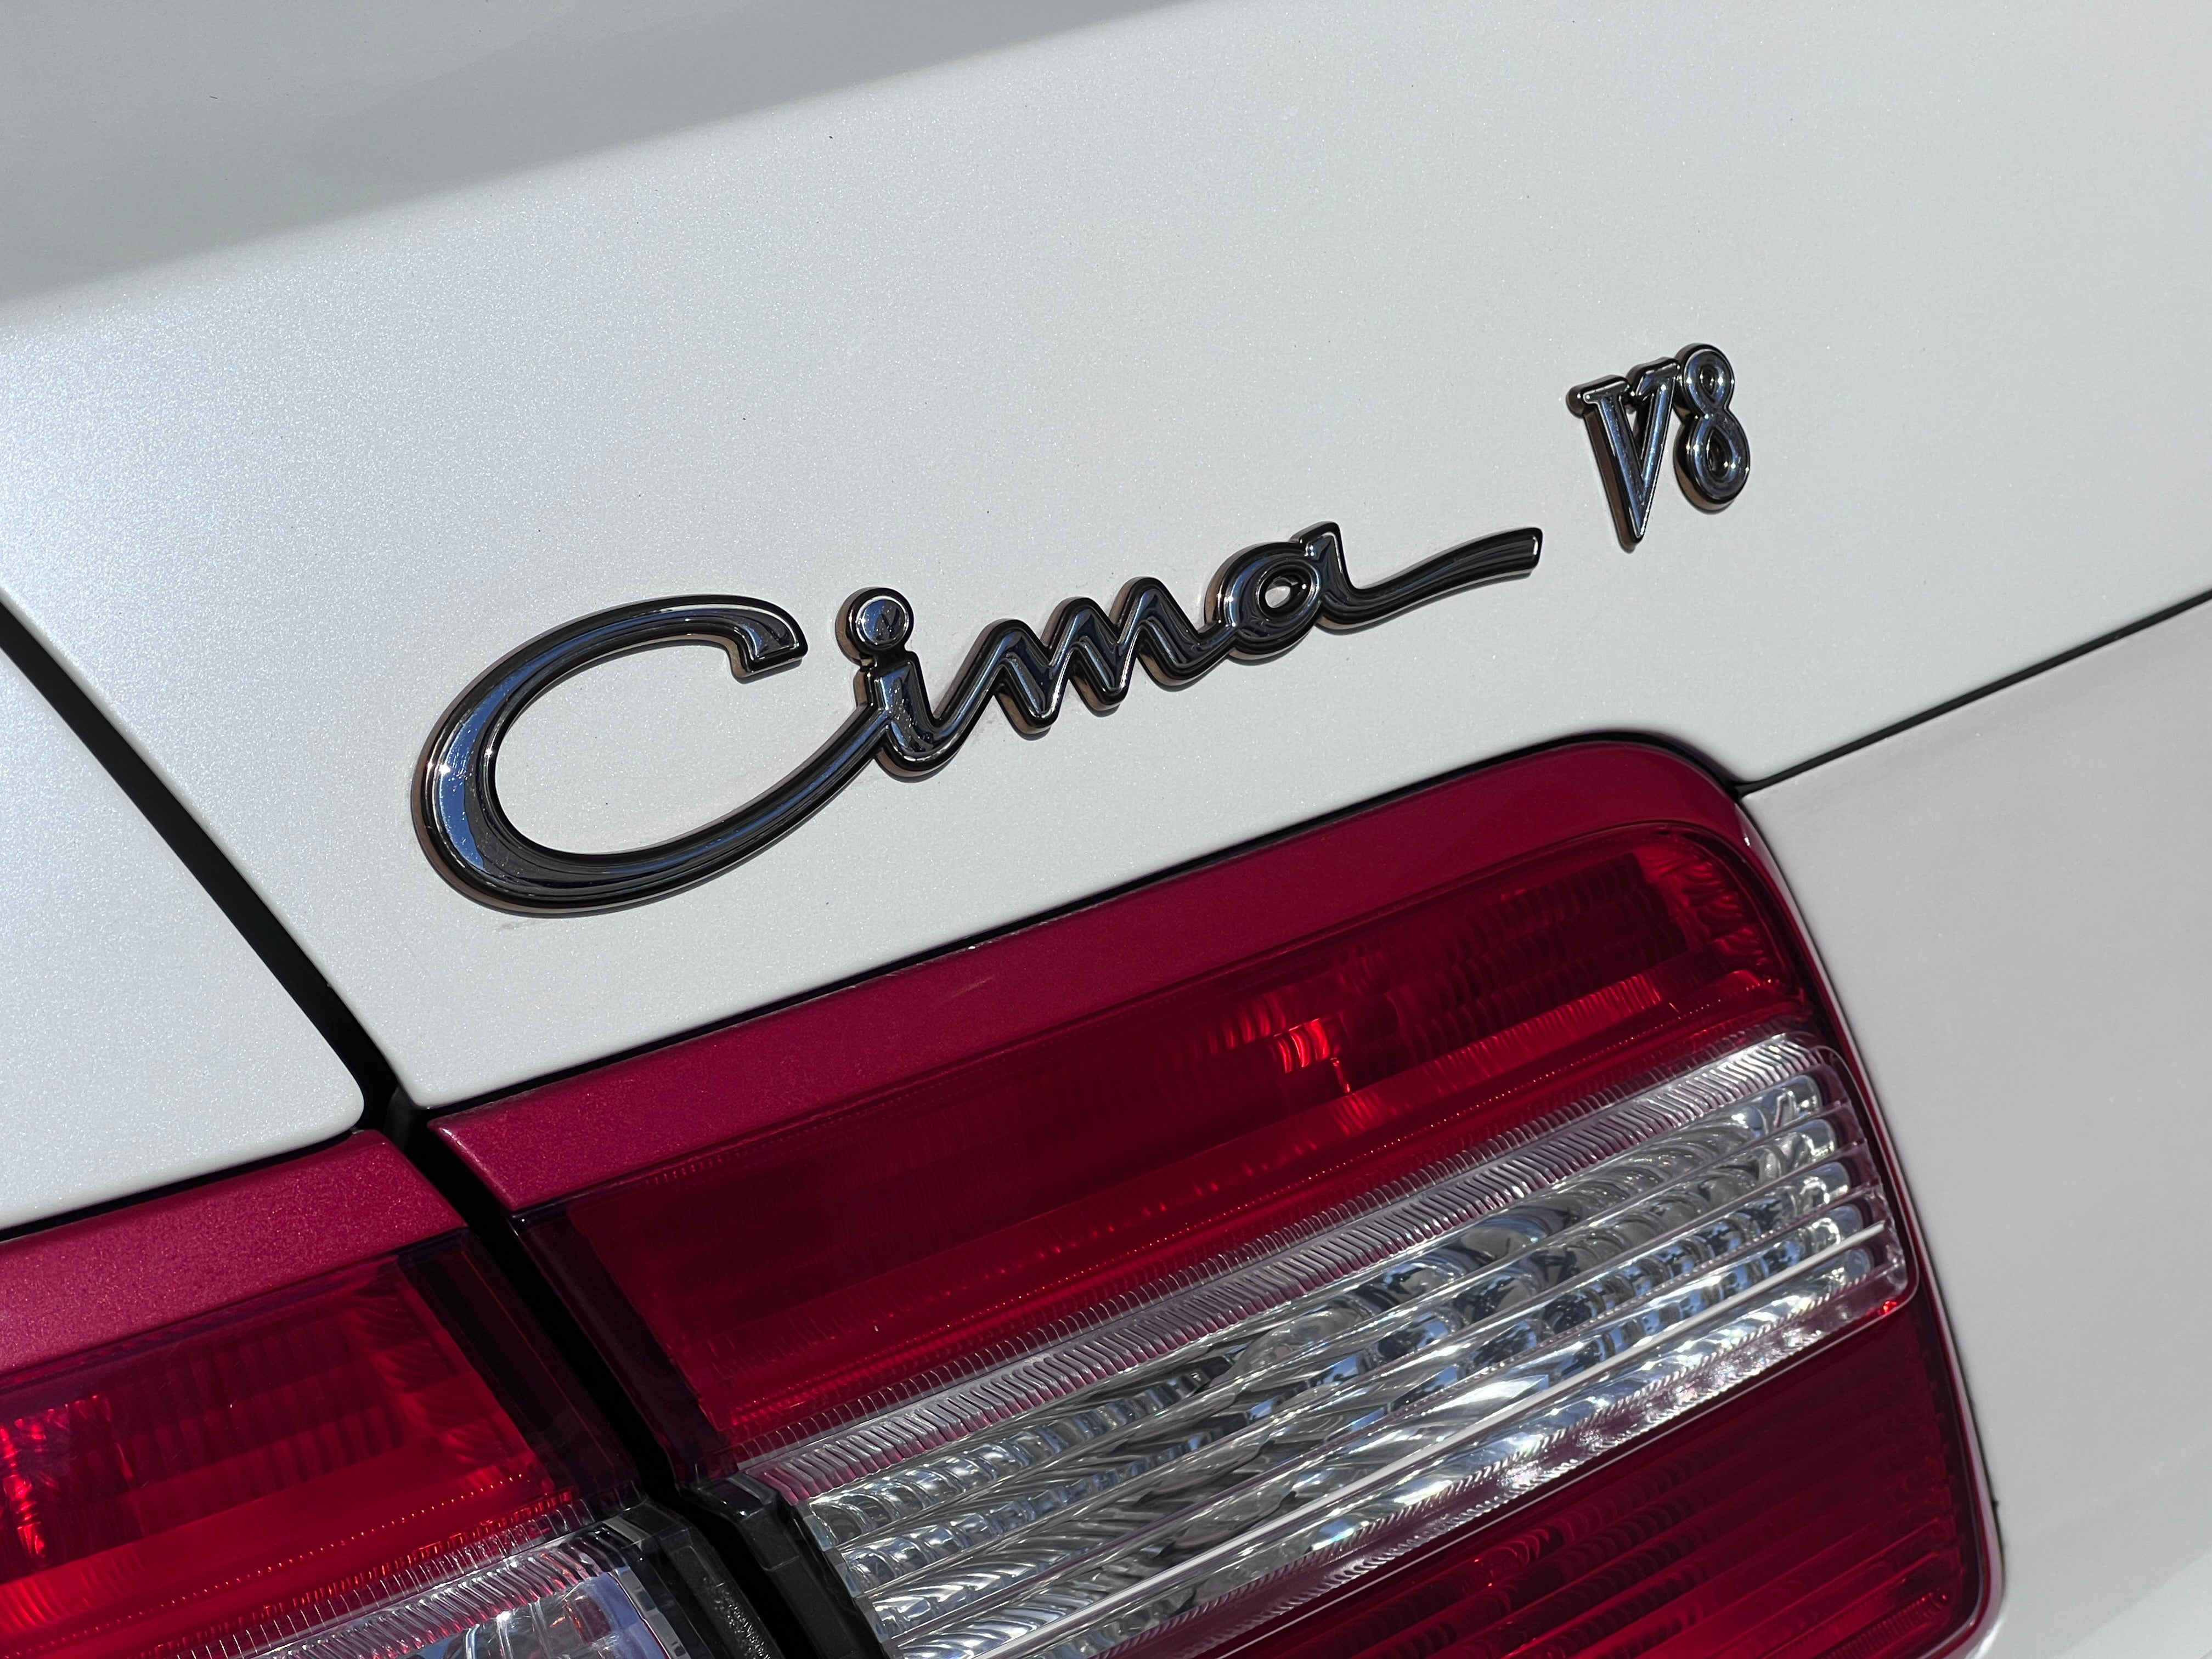 Nissan Cima V8